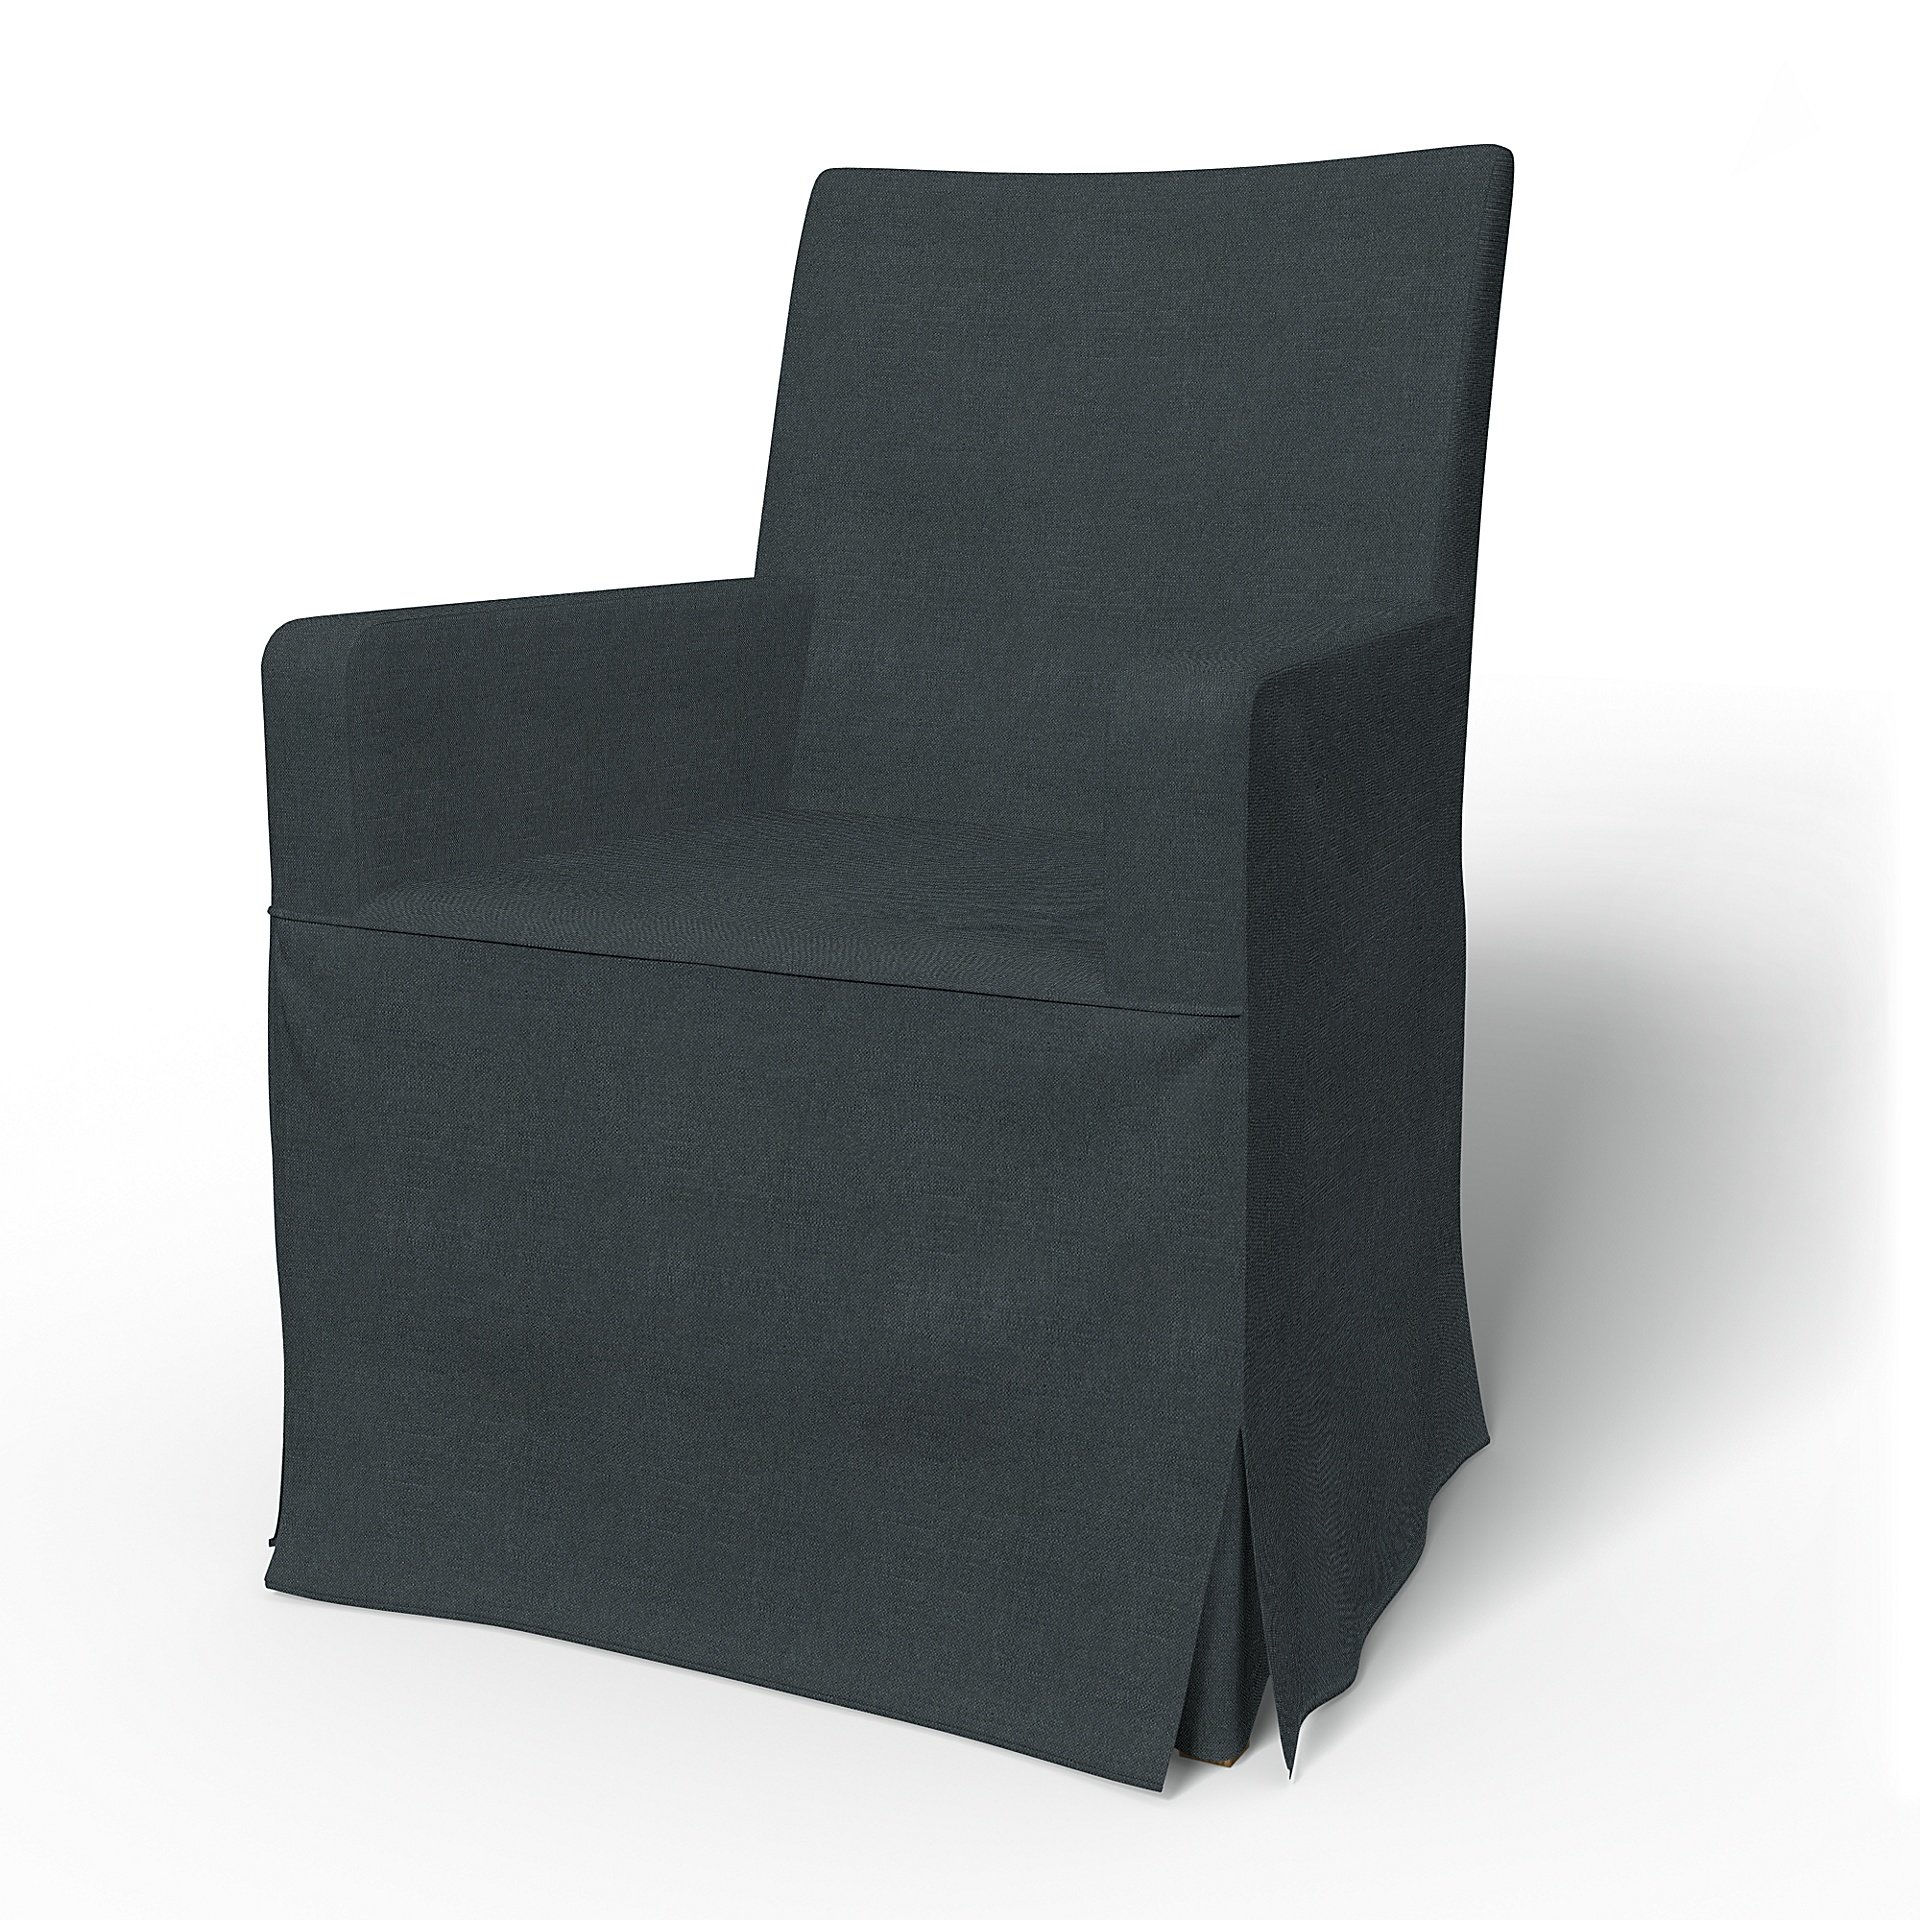 IKEA - Henriksdal, Chair cover w/ armrests, long skirt box pleat, Graphite Grey, Linen - Bemz